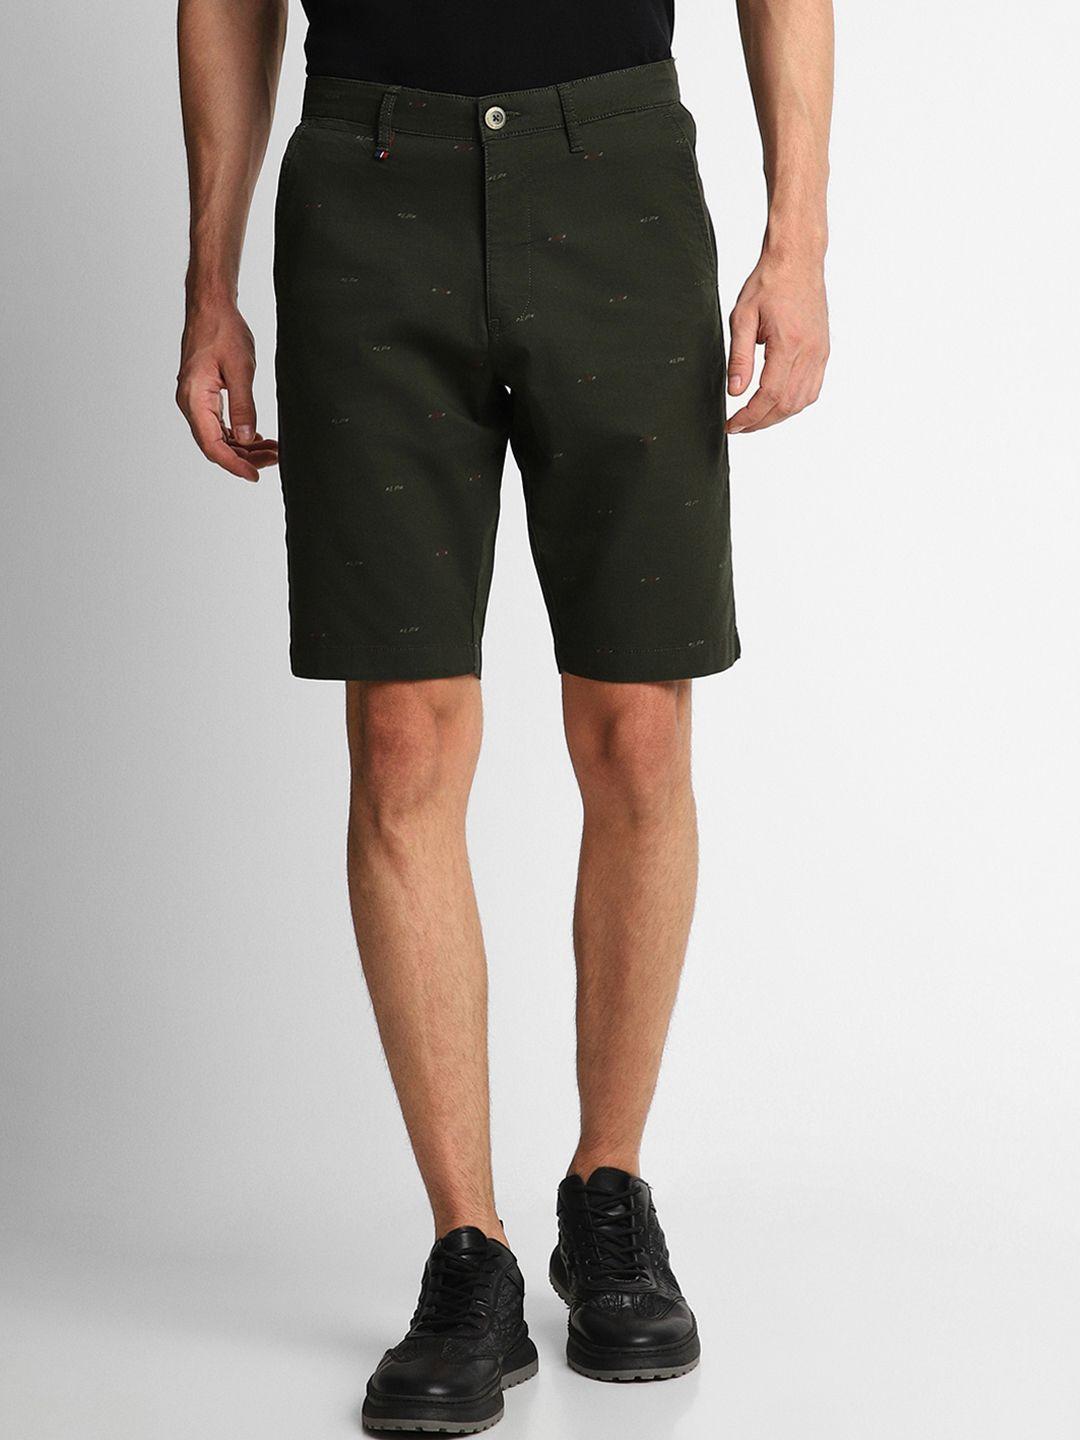 louis philippe sport men printed slim fit shorts